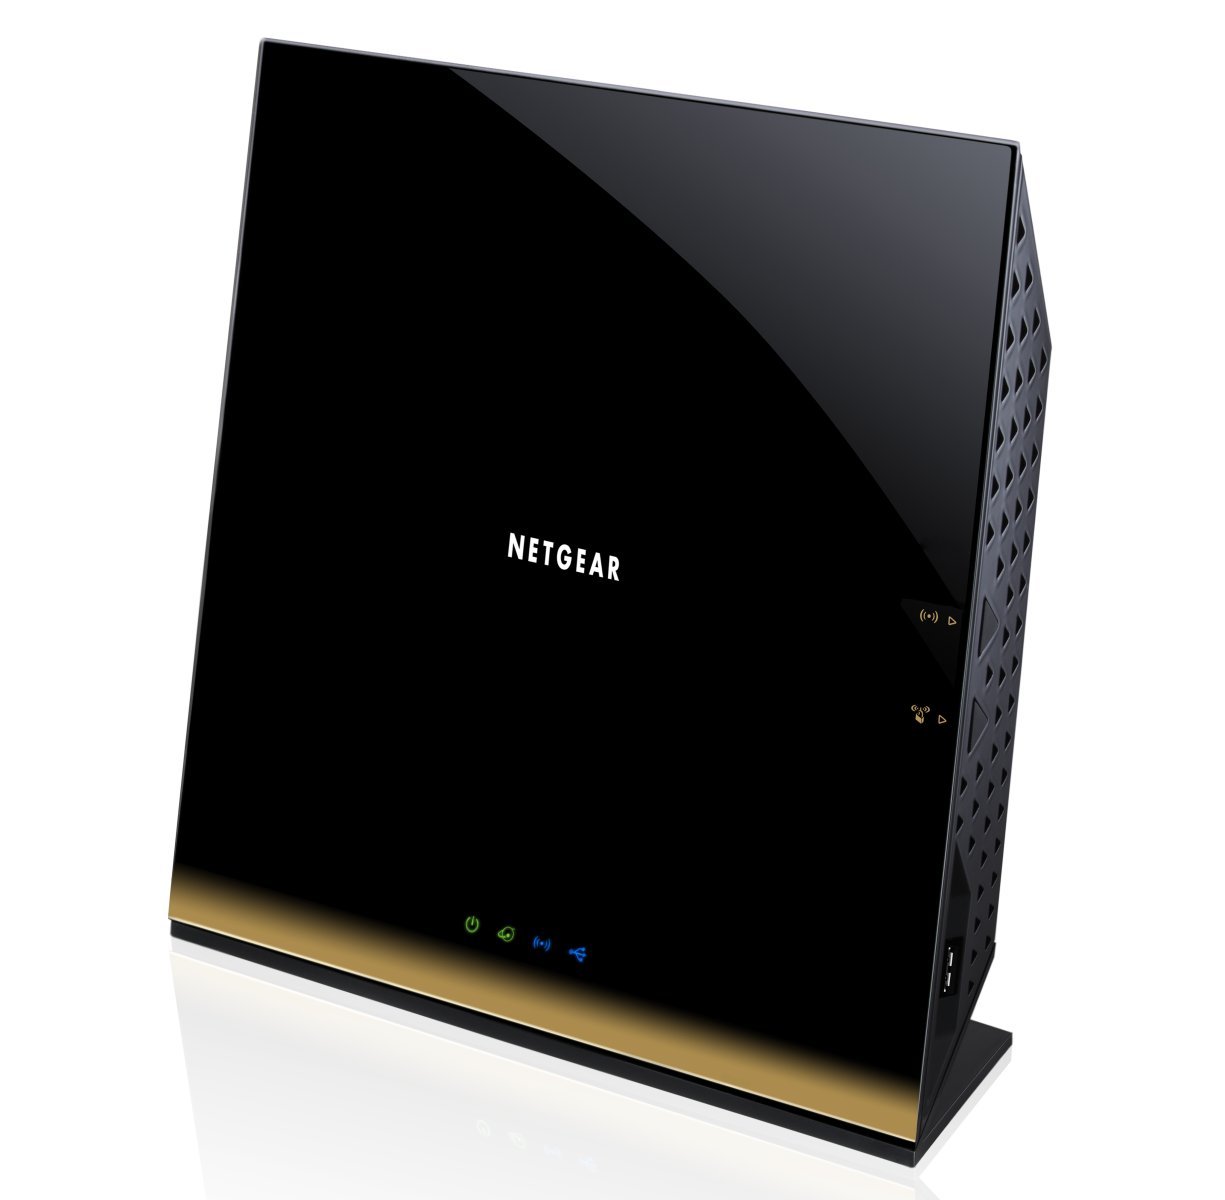 Netgear R6300 WiFi Dual Band Gigabit Router